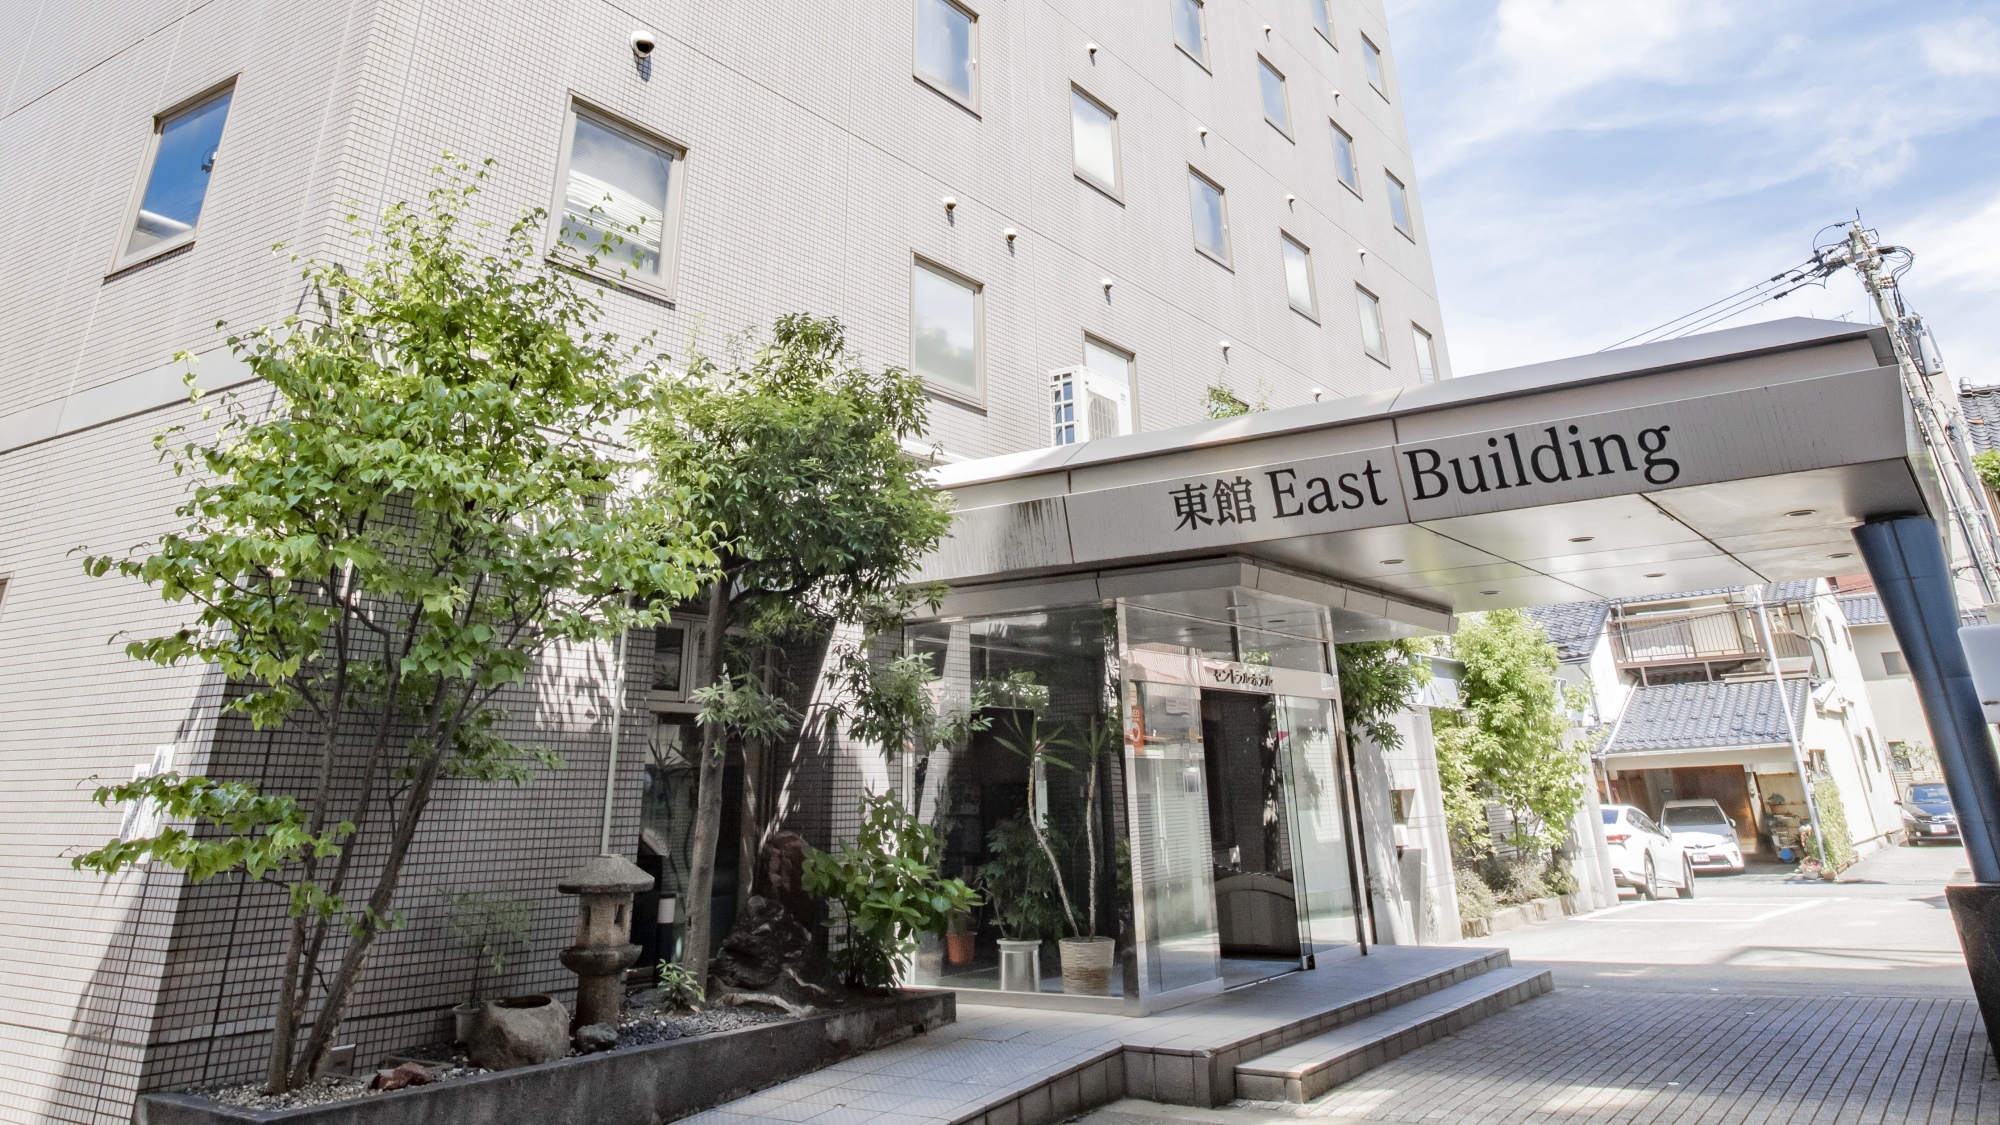 Kanazawa Central Hotel (East Building)